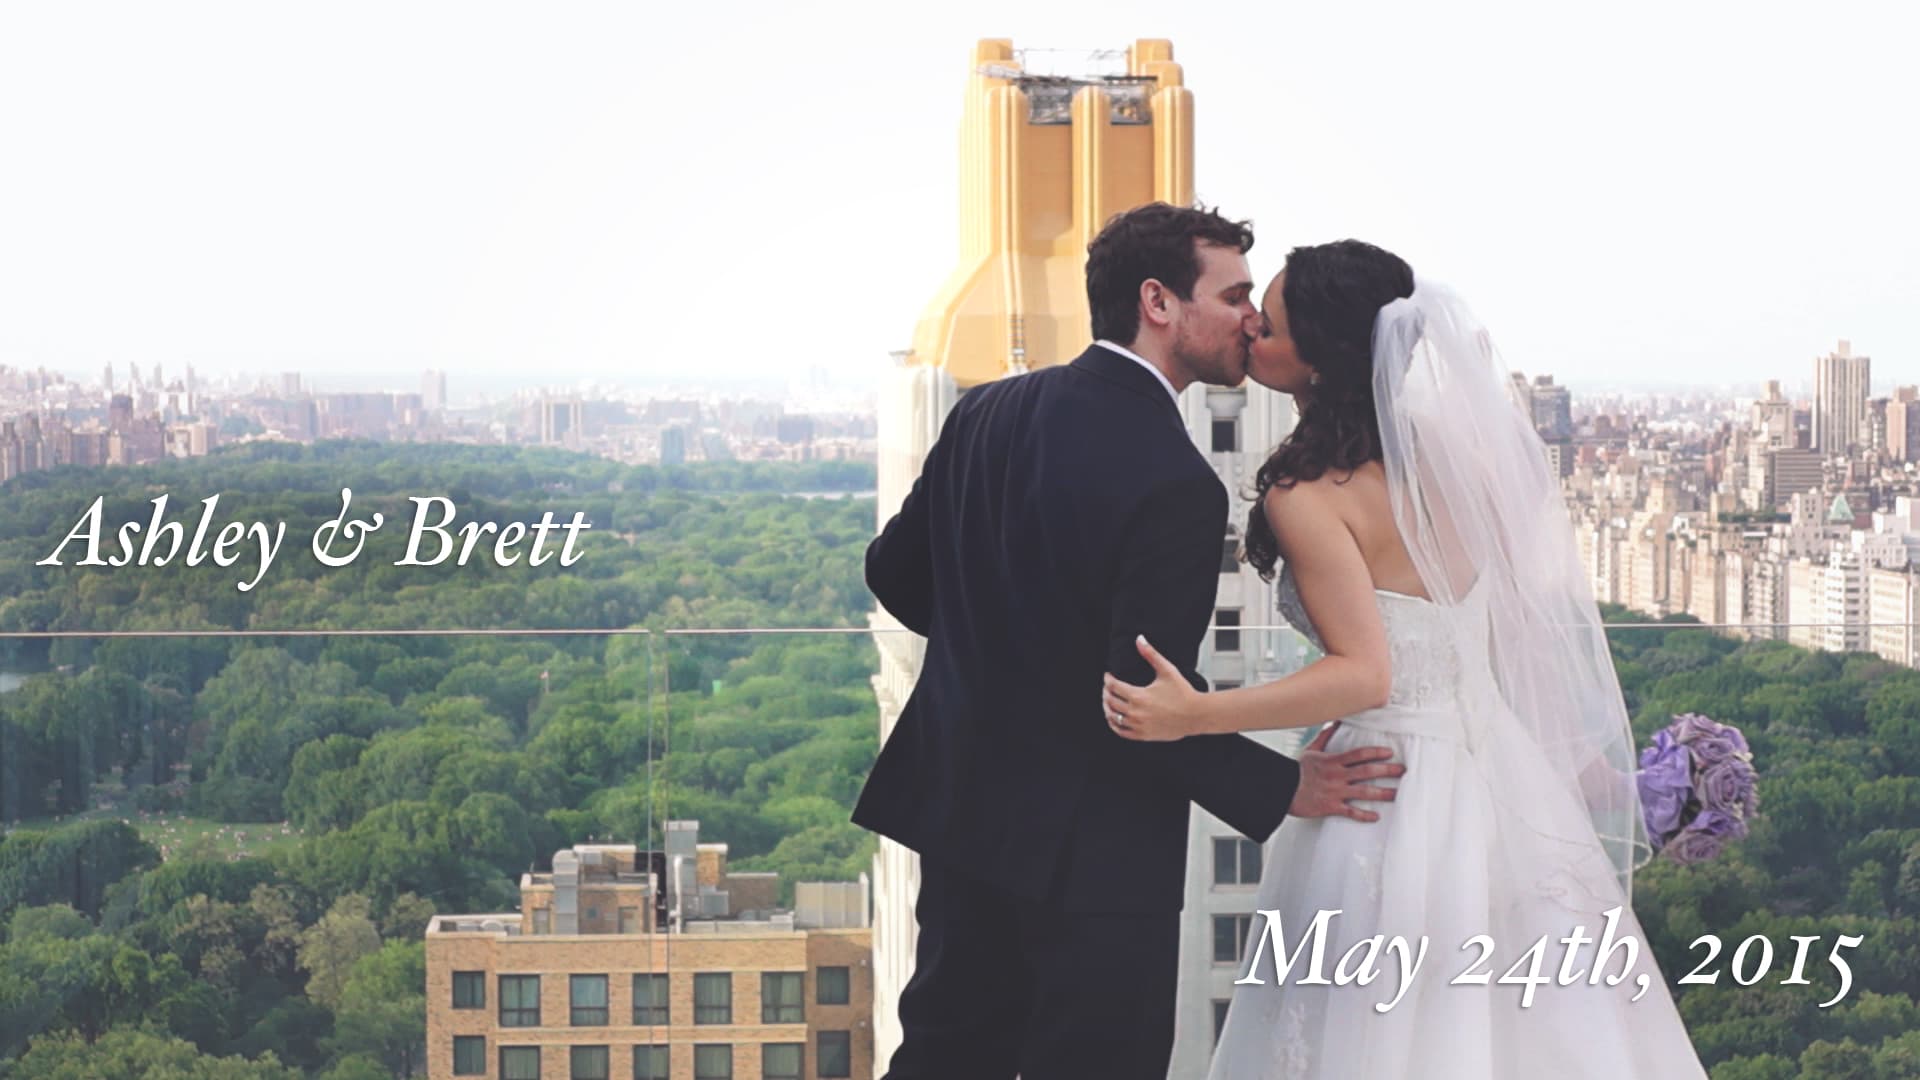 Ashley & Bretts Le Parker Meridien Wedding Video in Manhattan New York City